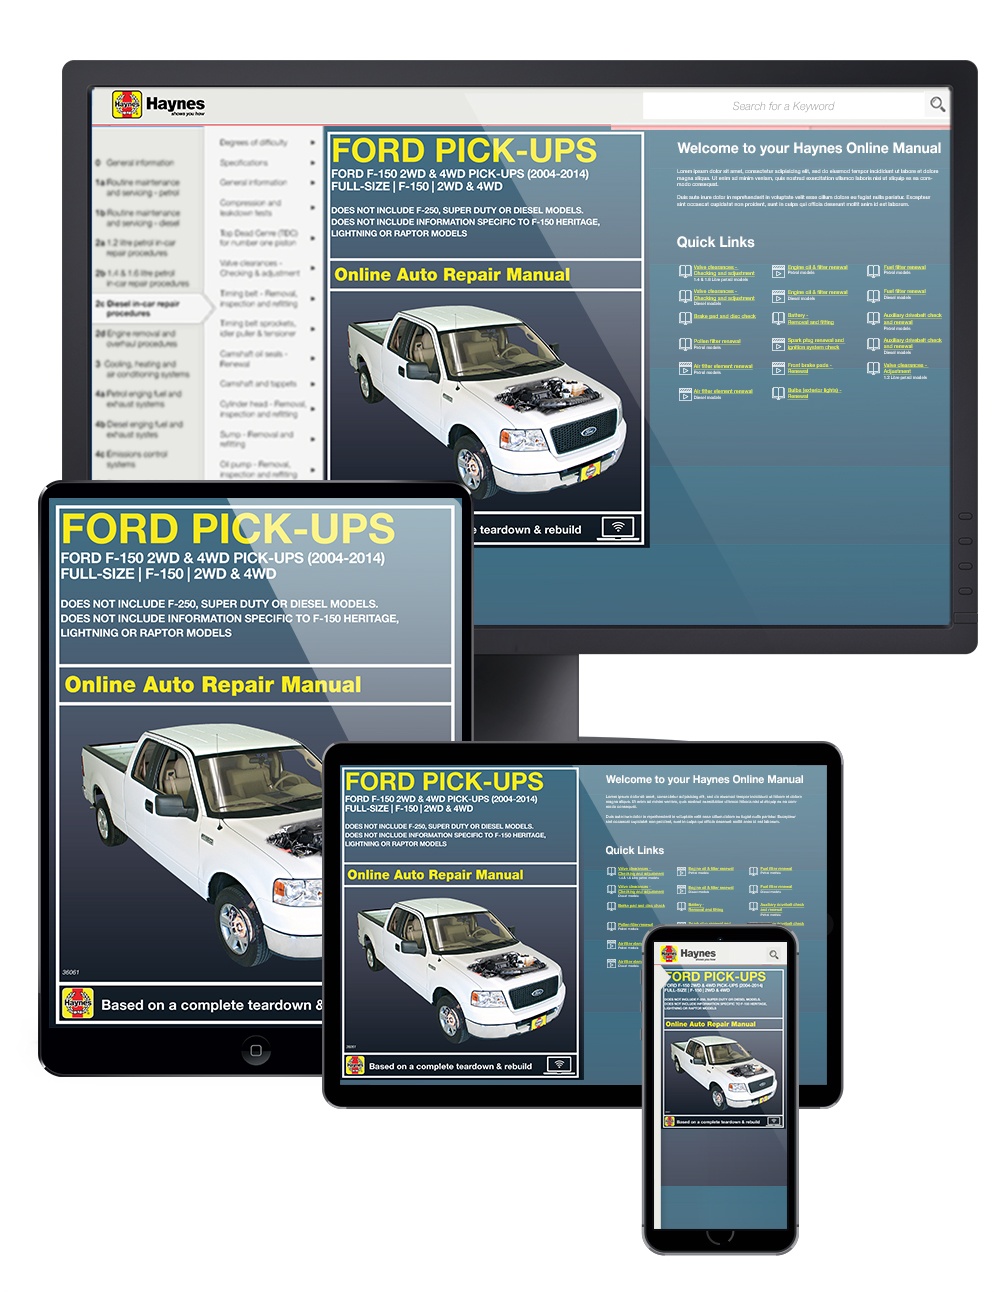 Download chilton repair manual 8 ford f-150 pick-ups 2004-2014 pdf free